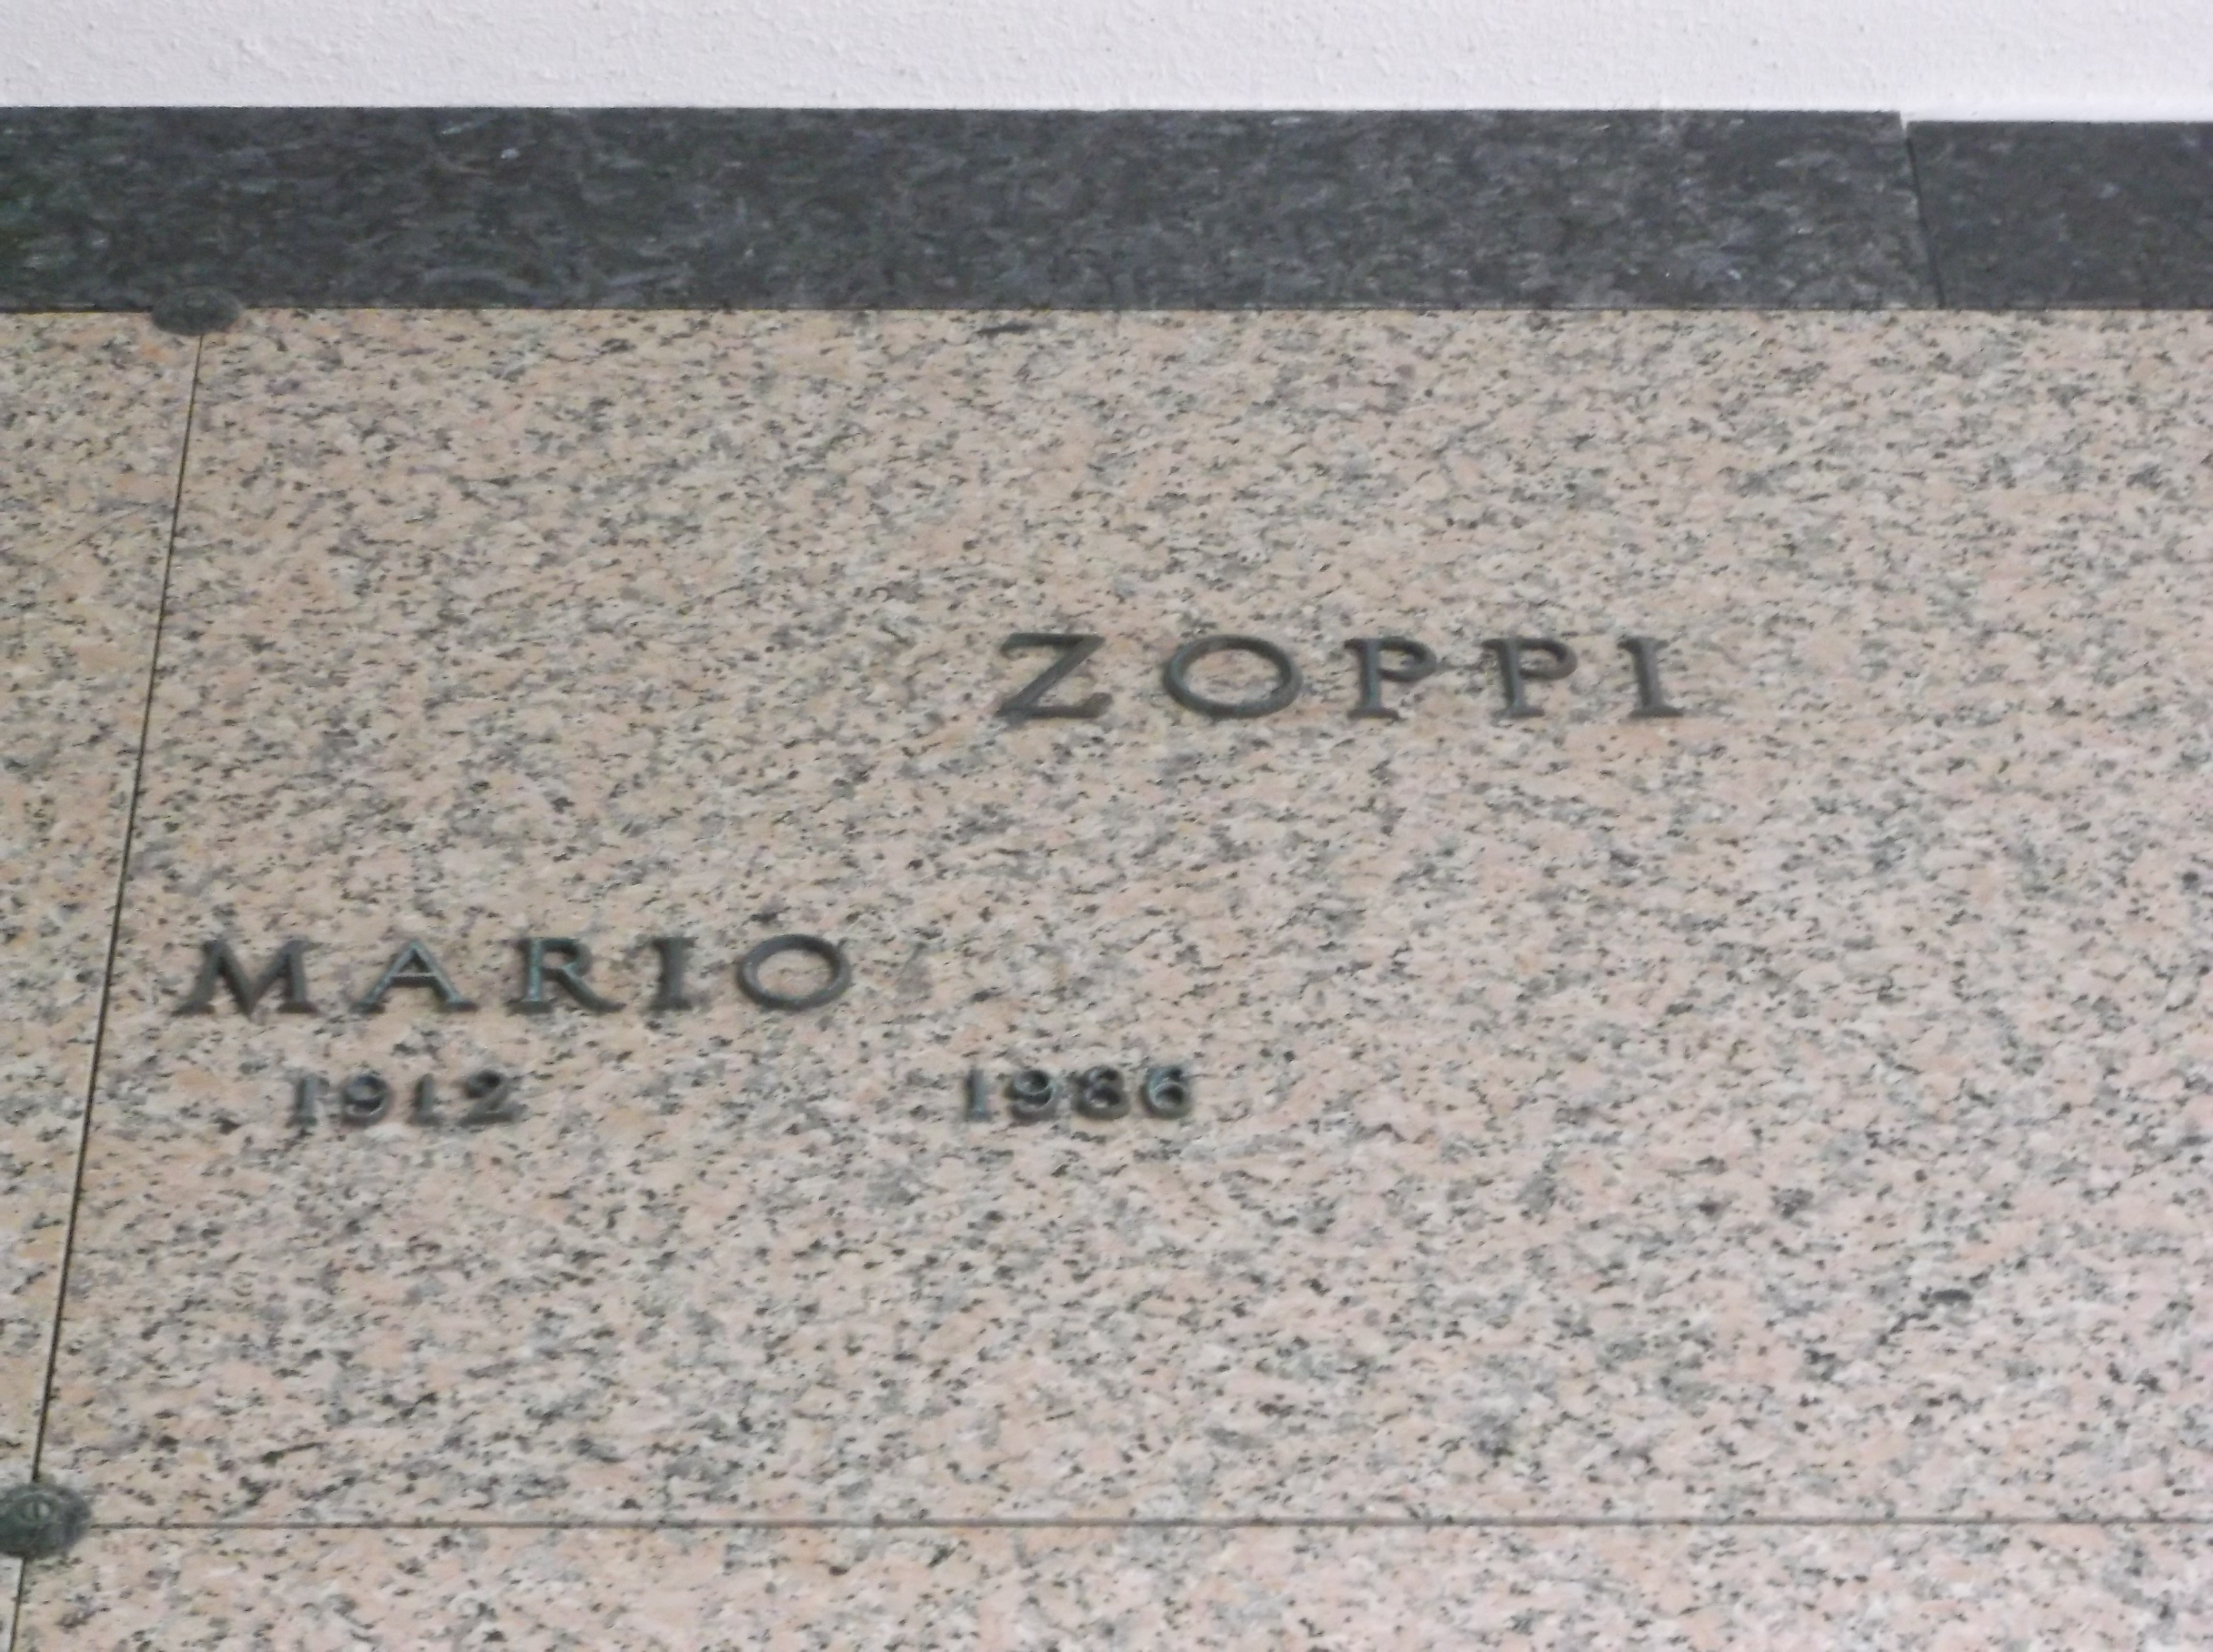 Mario Zoppi